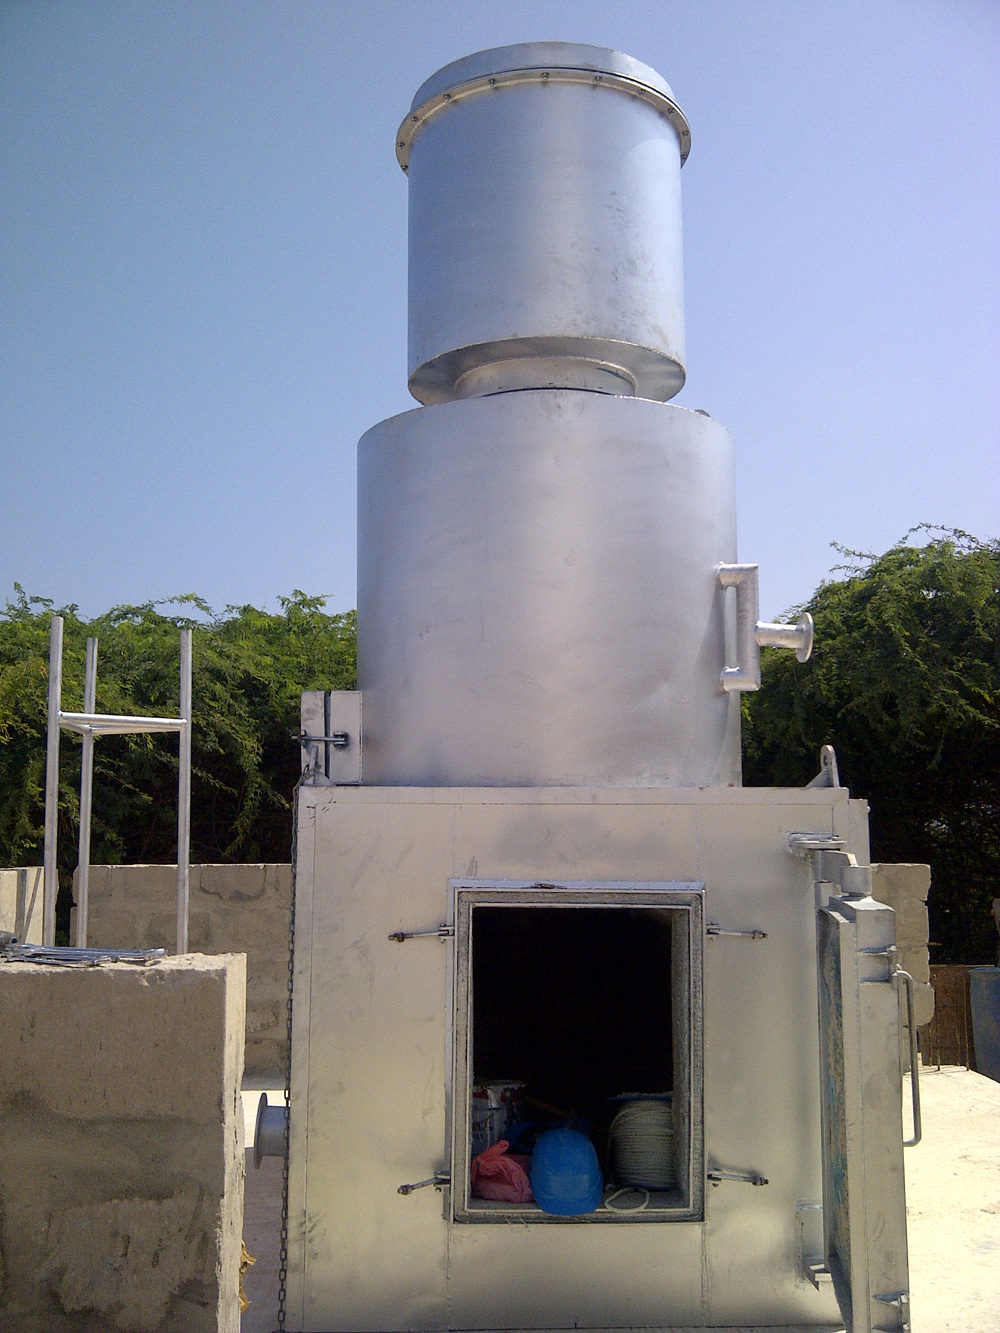 300 kg incinerator